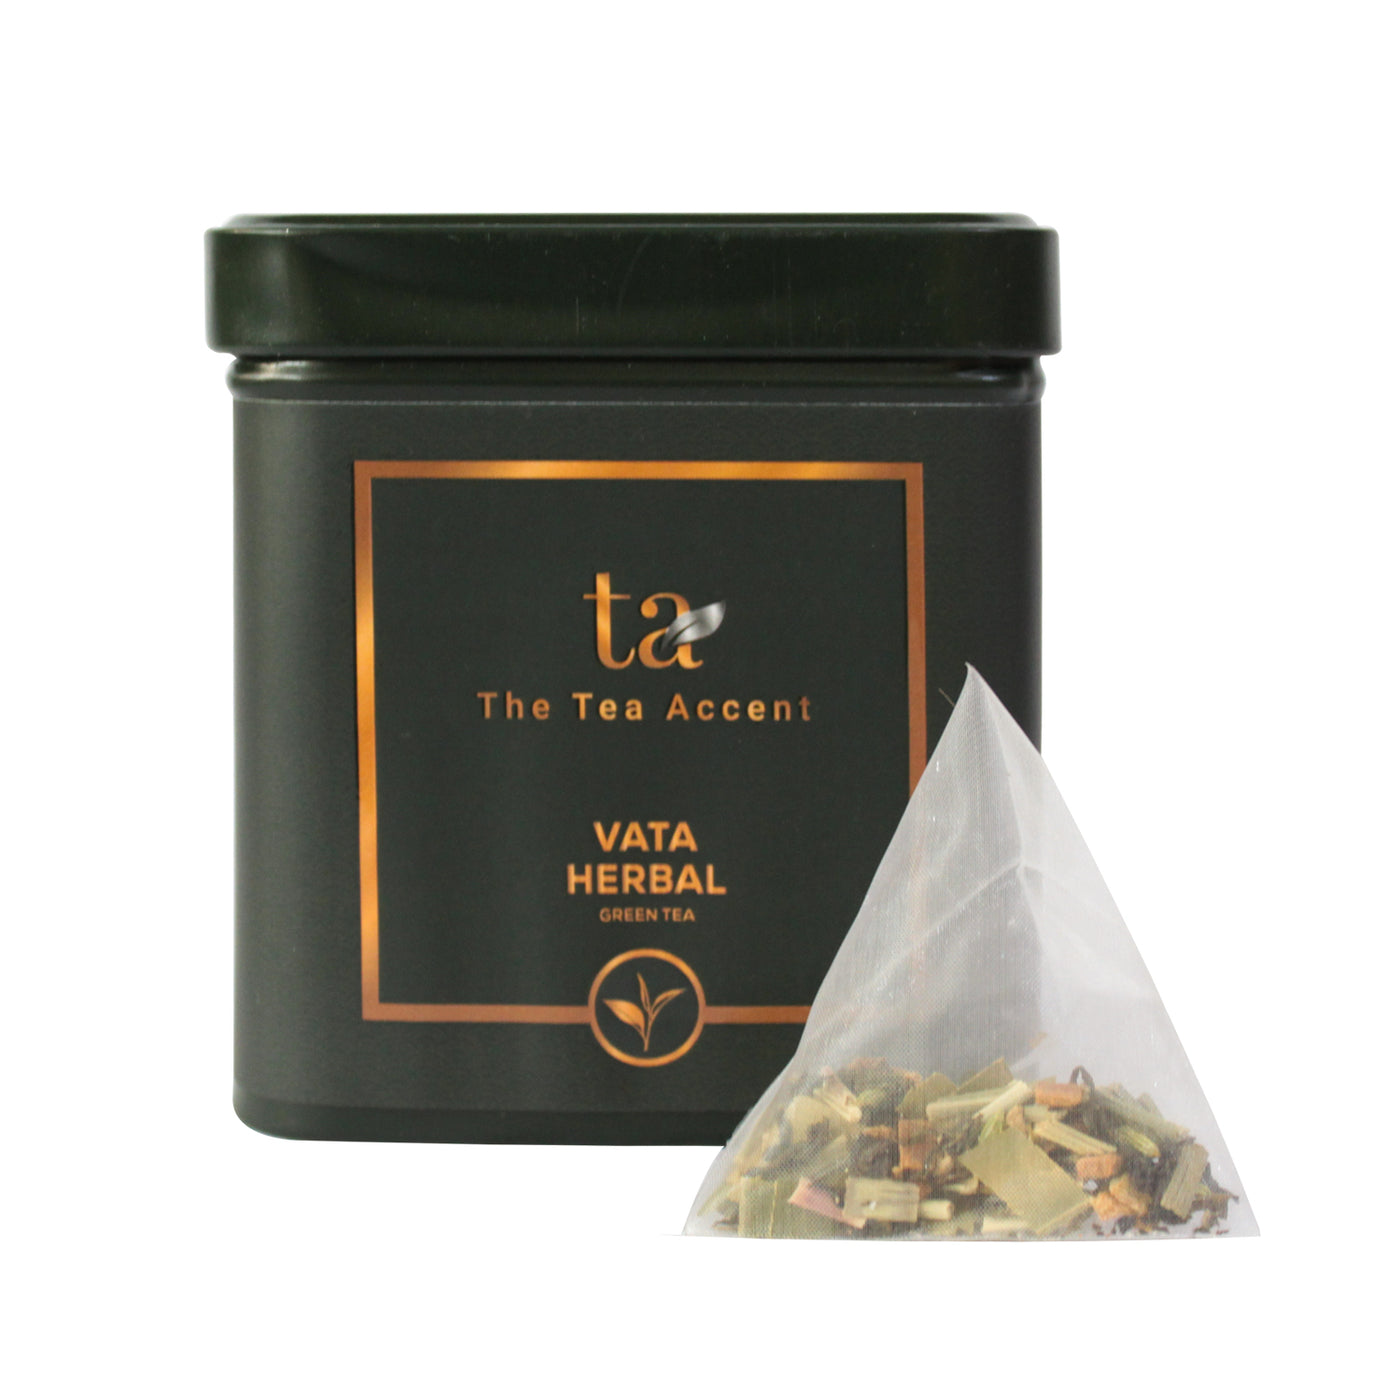 Vata Herbal Tea